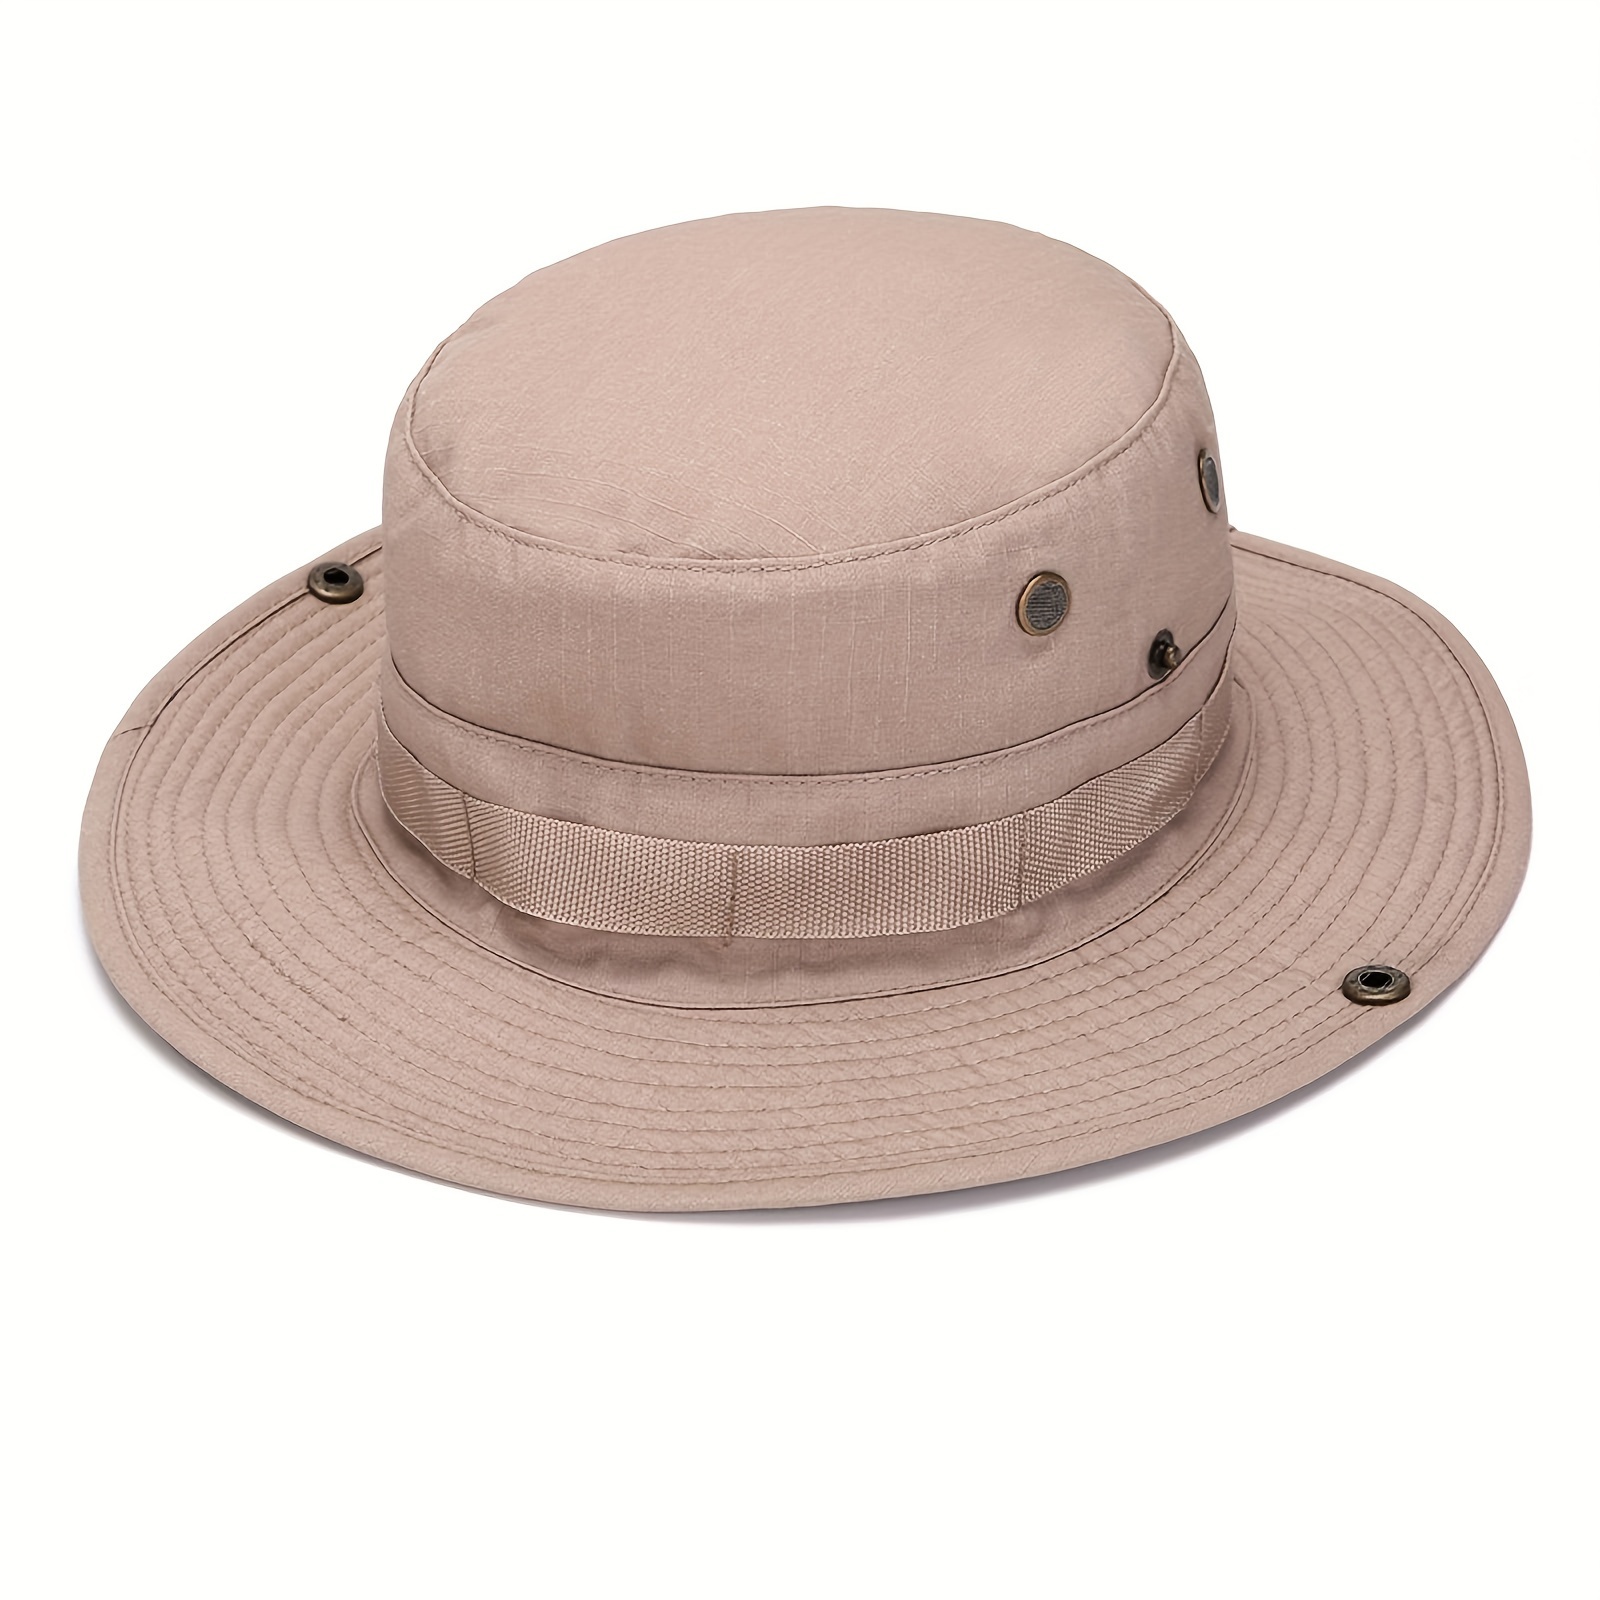 7 Pcs Bucket Hat Wide Brim Boonie Hat Sun Cooling Sun Fishing Hat for Men Women Outdoor Summer Safari Hiking Hunting Fishing Gardening, 6 Colors